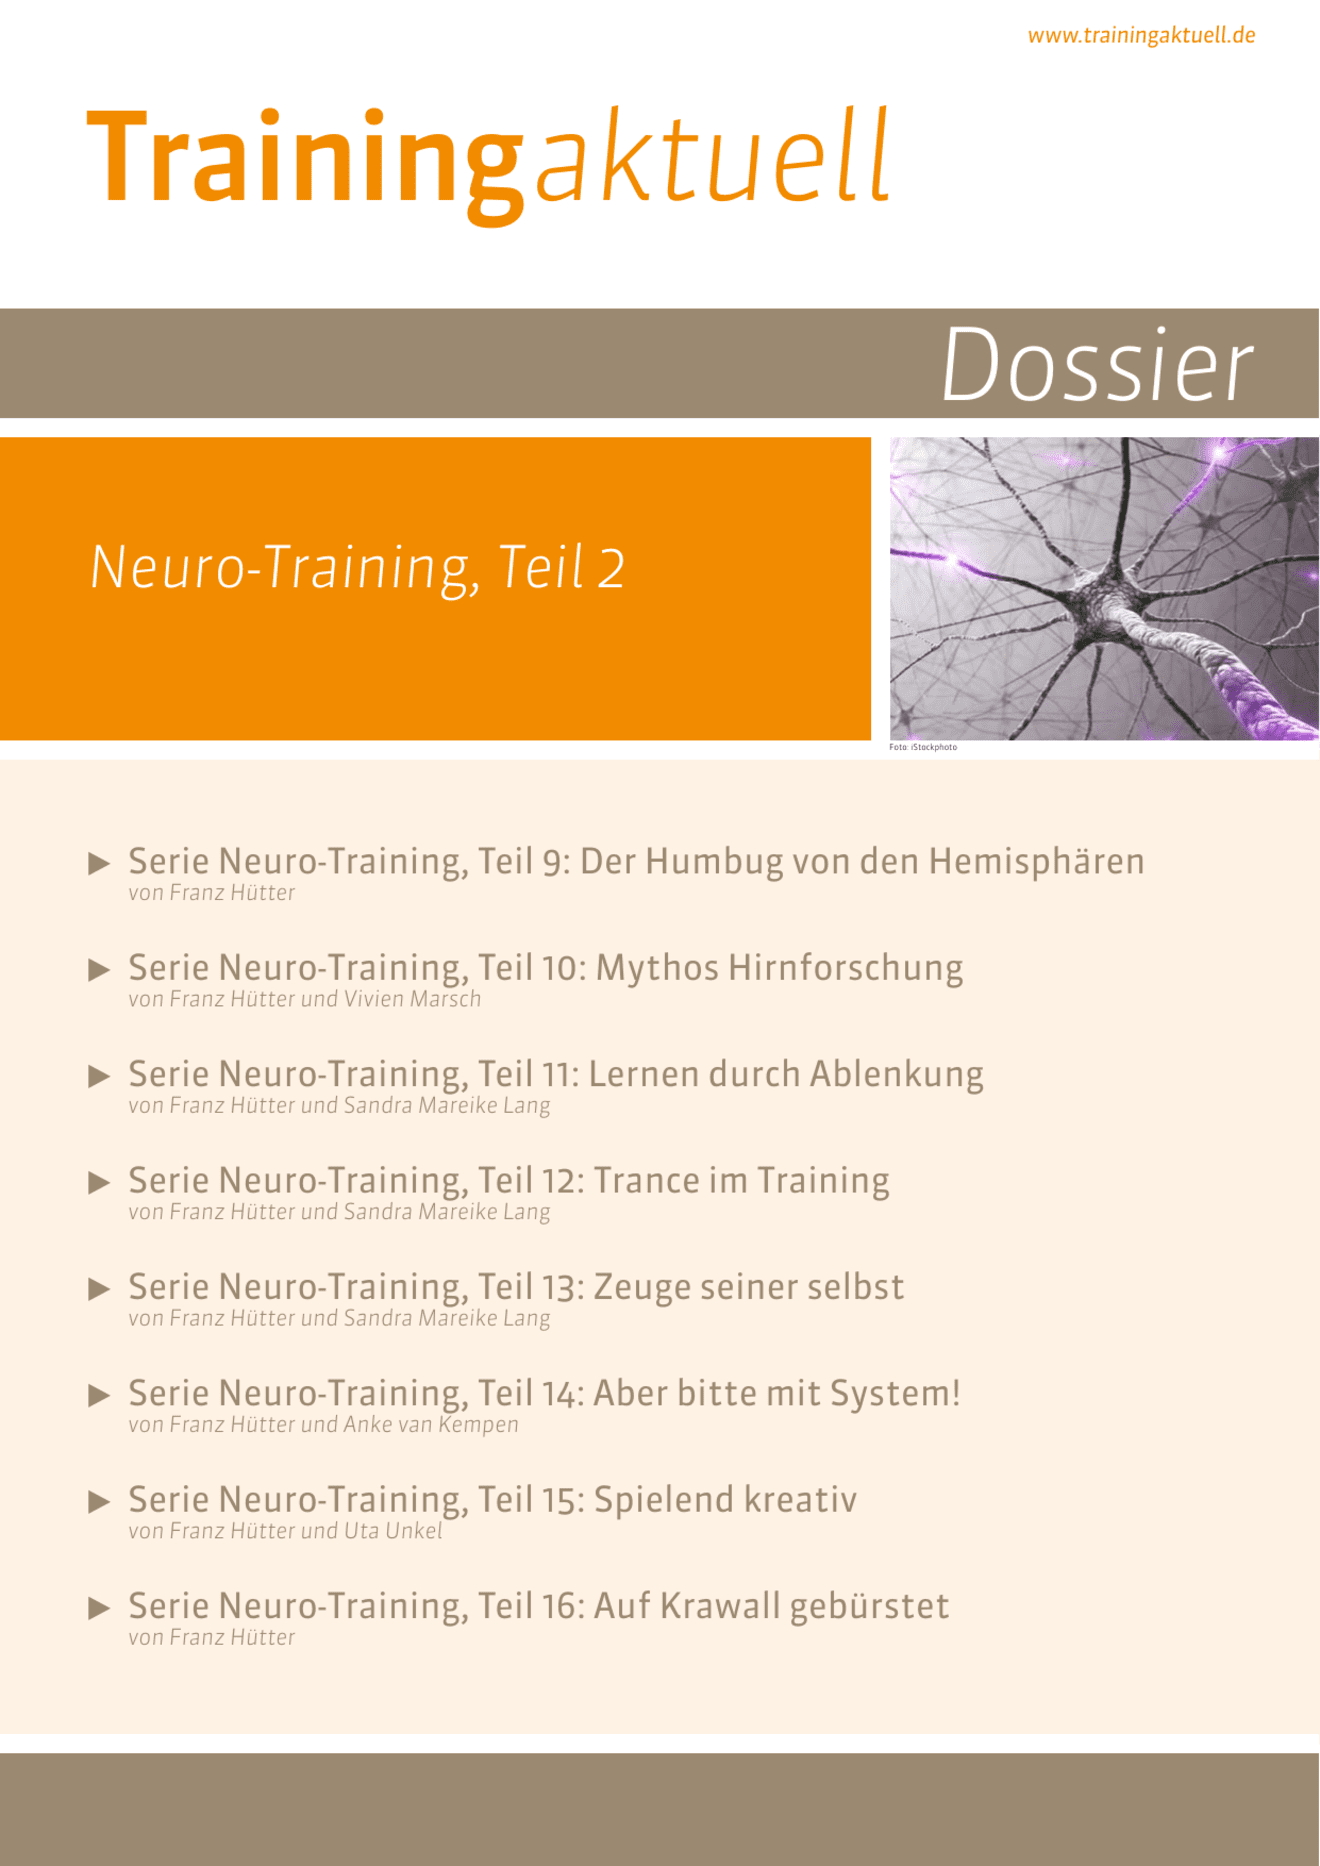 Dossier Neuro-Training, Teil 2